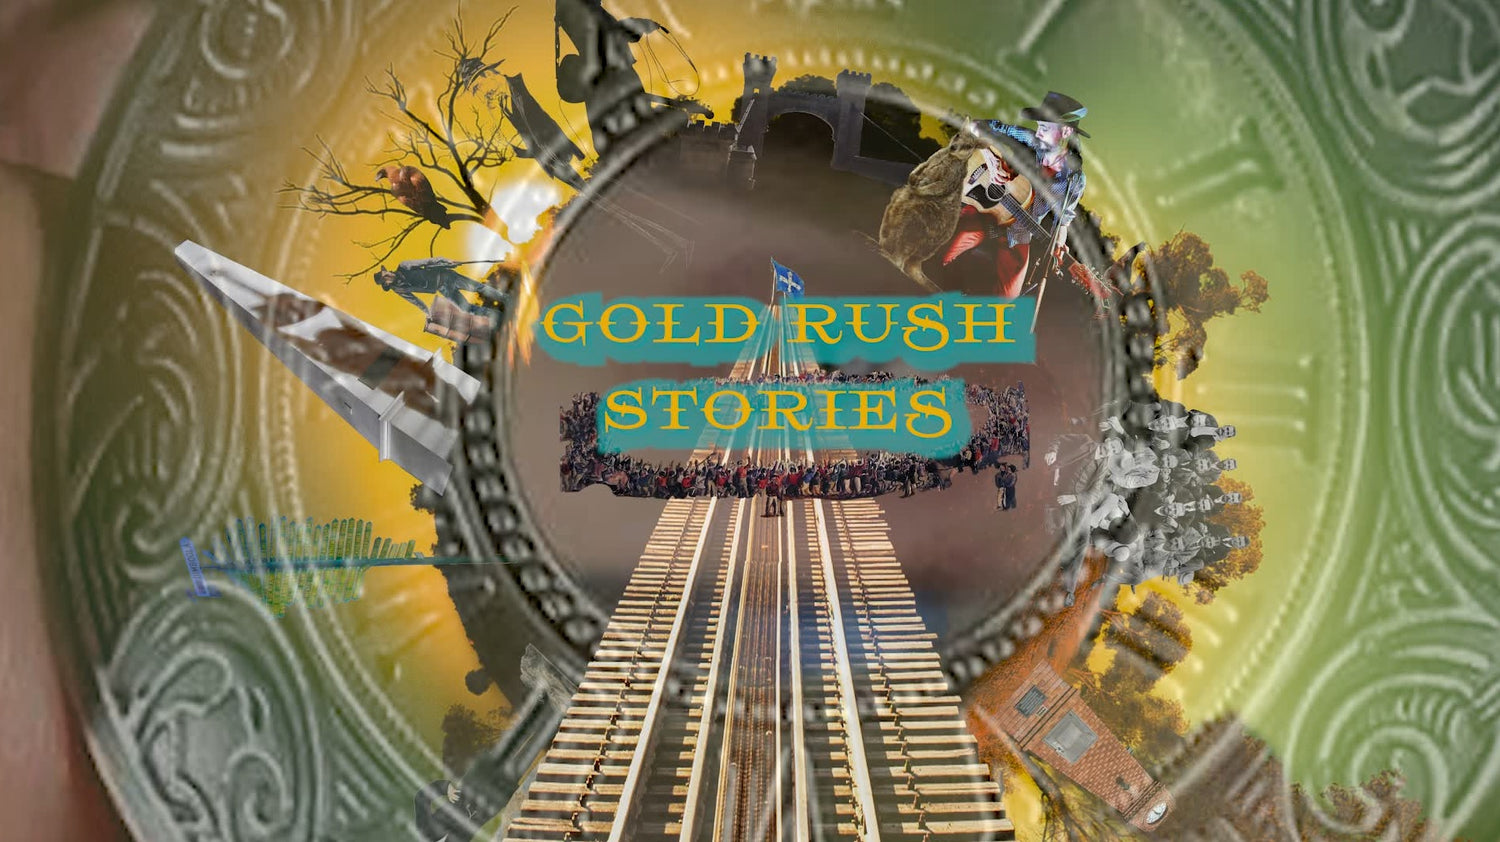 Gold Rush Stories Historical Series Title Plate Kieran Wicks Animation